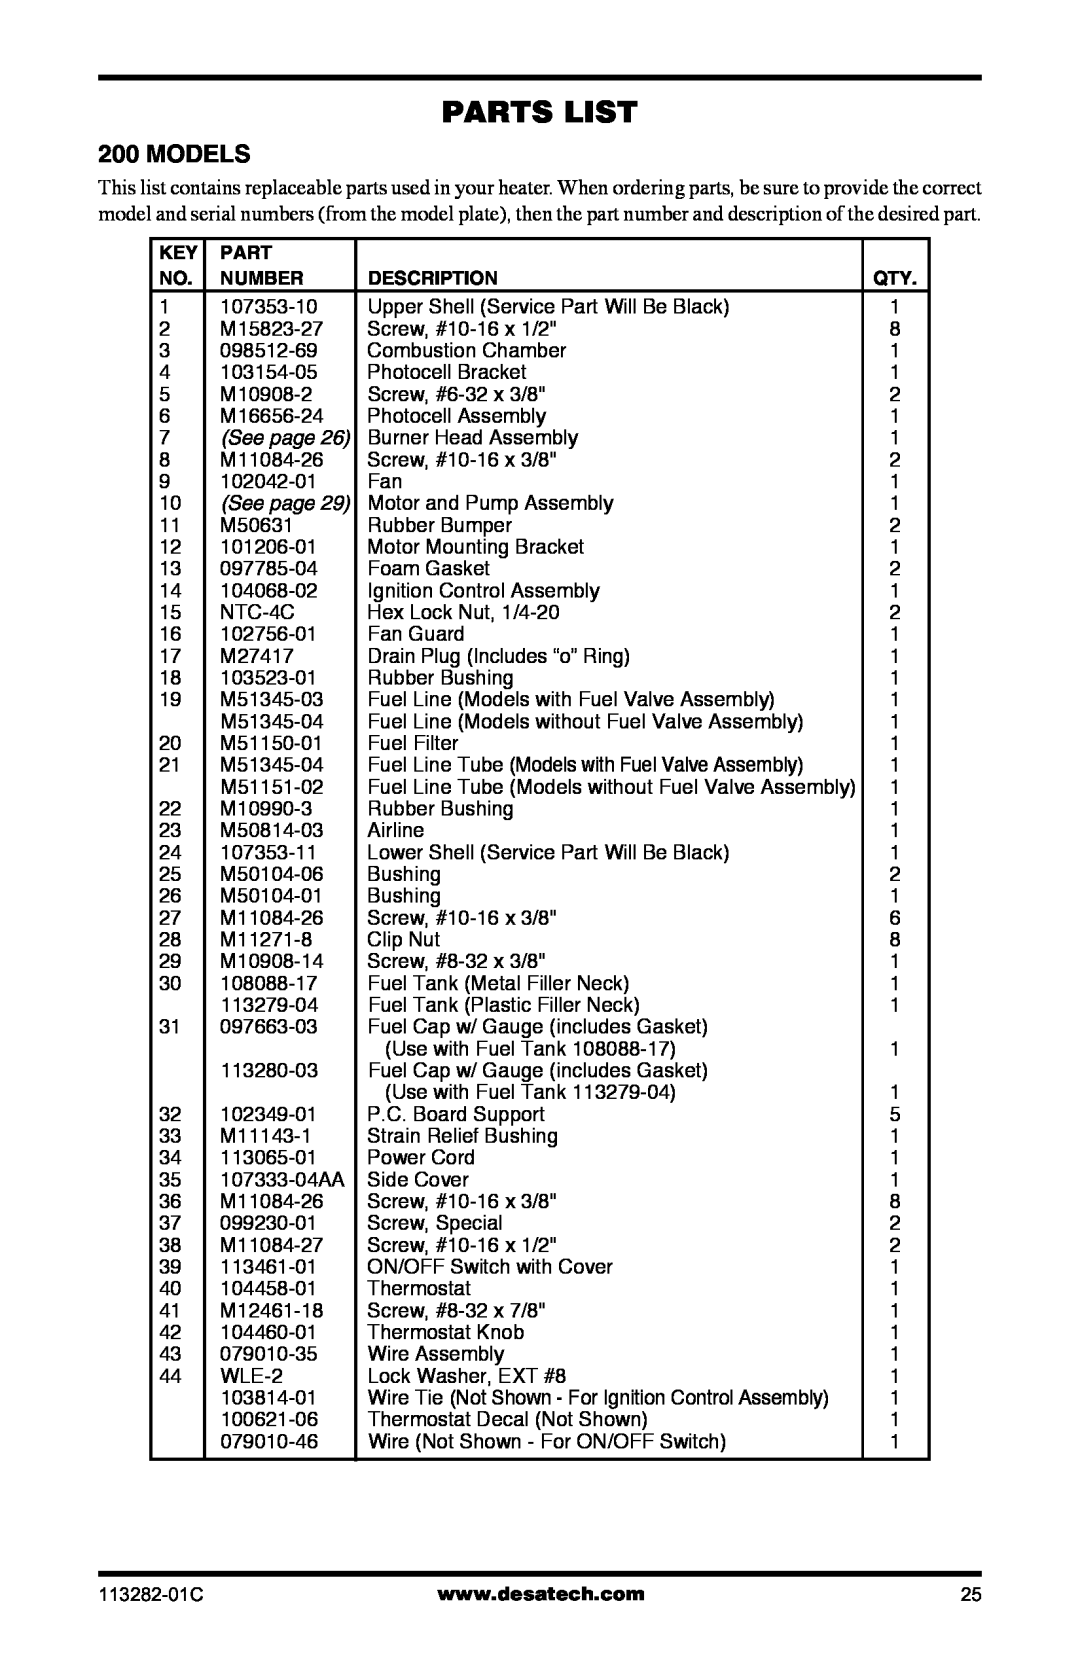 Desa BTU/HR owner manual Parts List, Models 